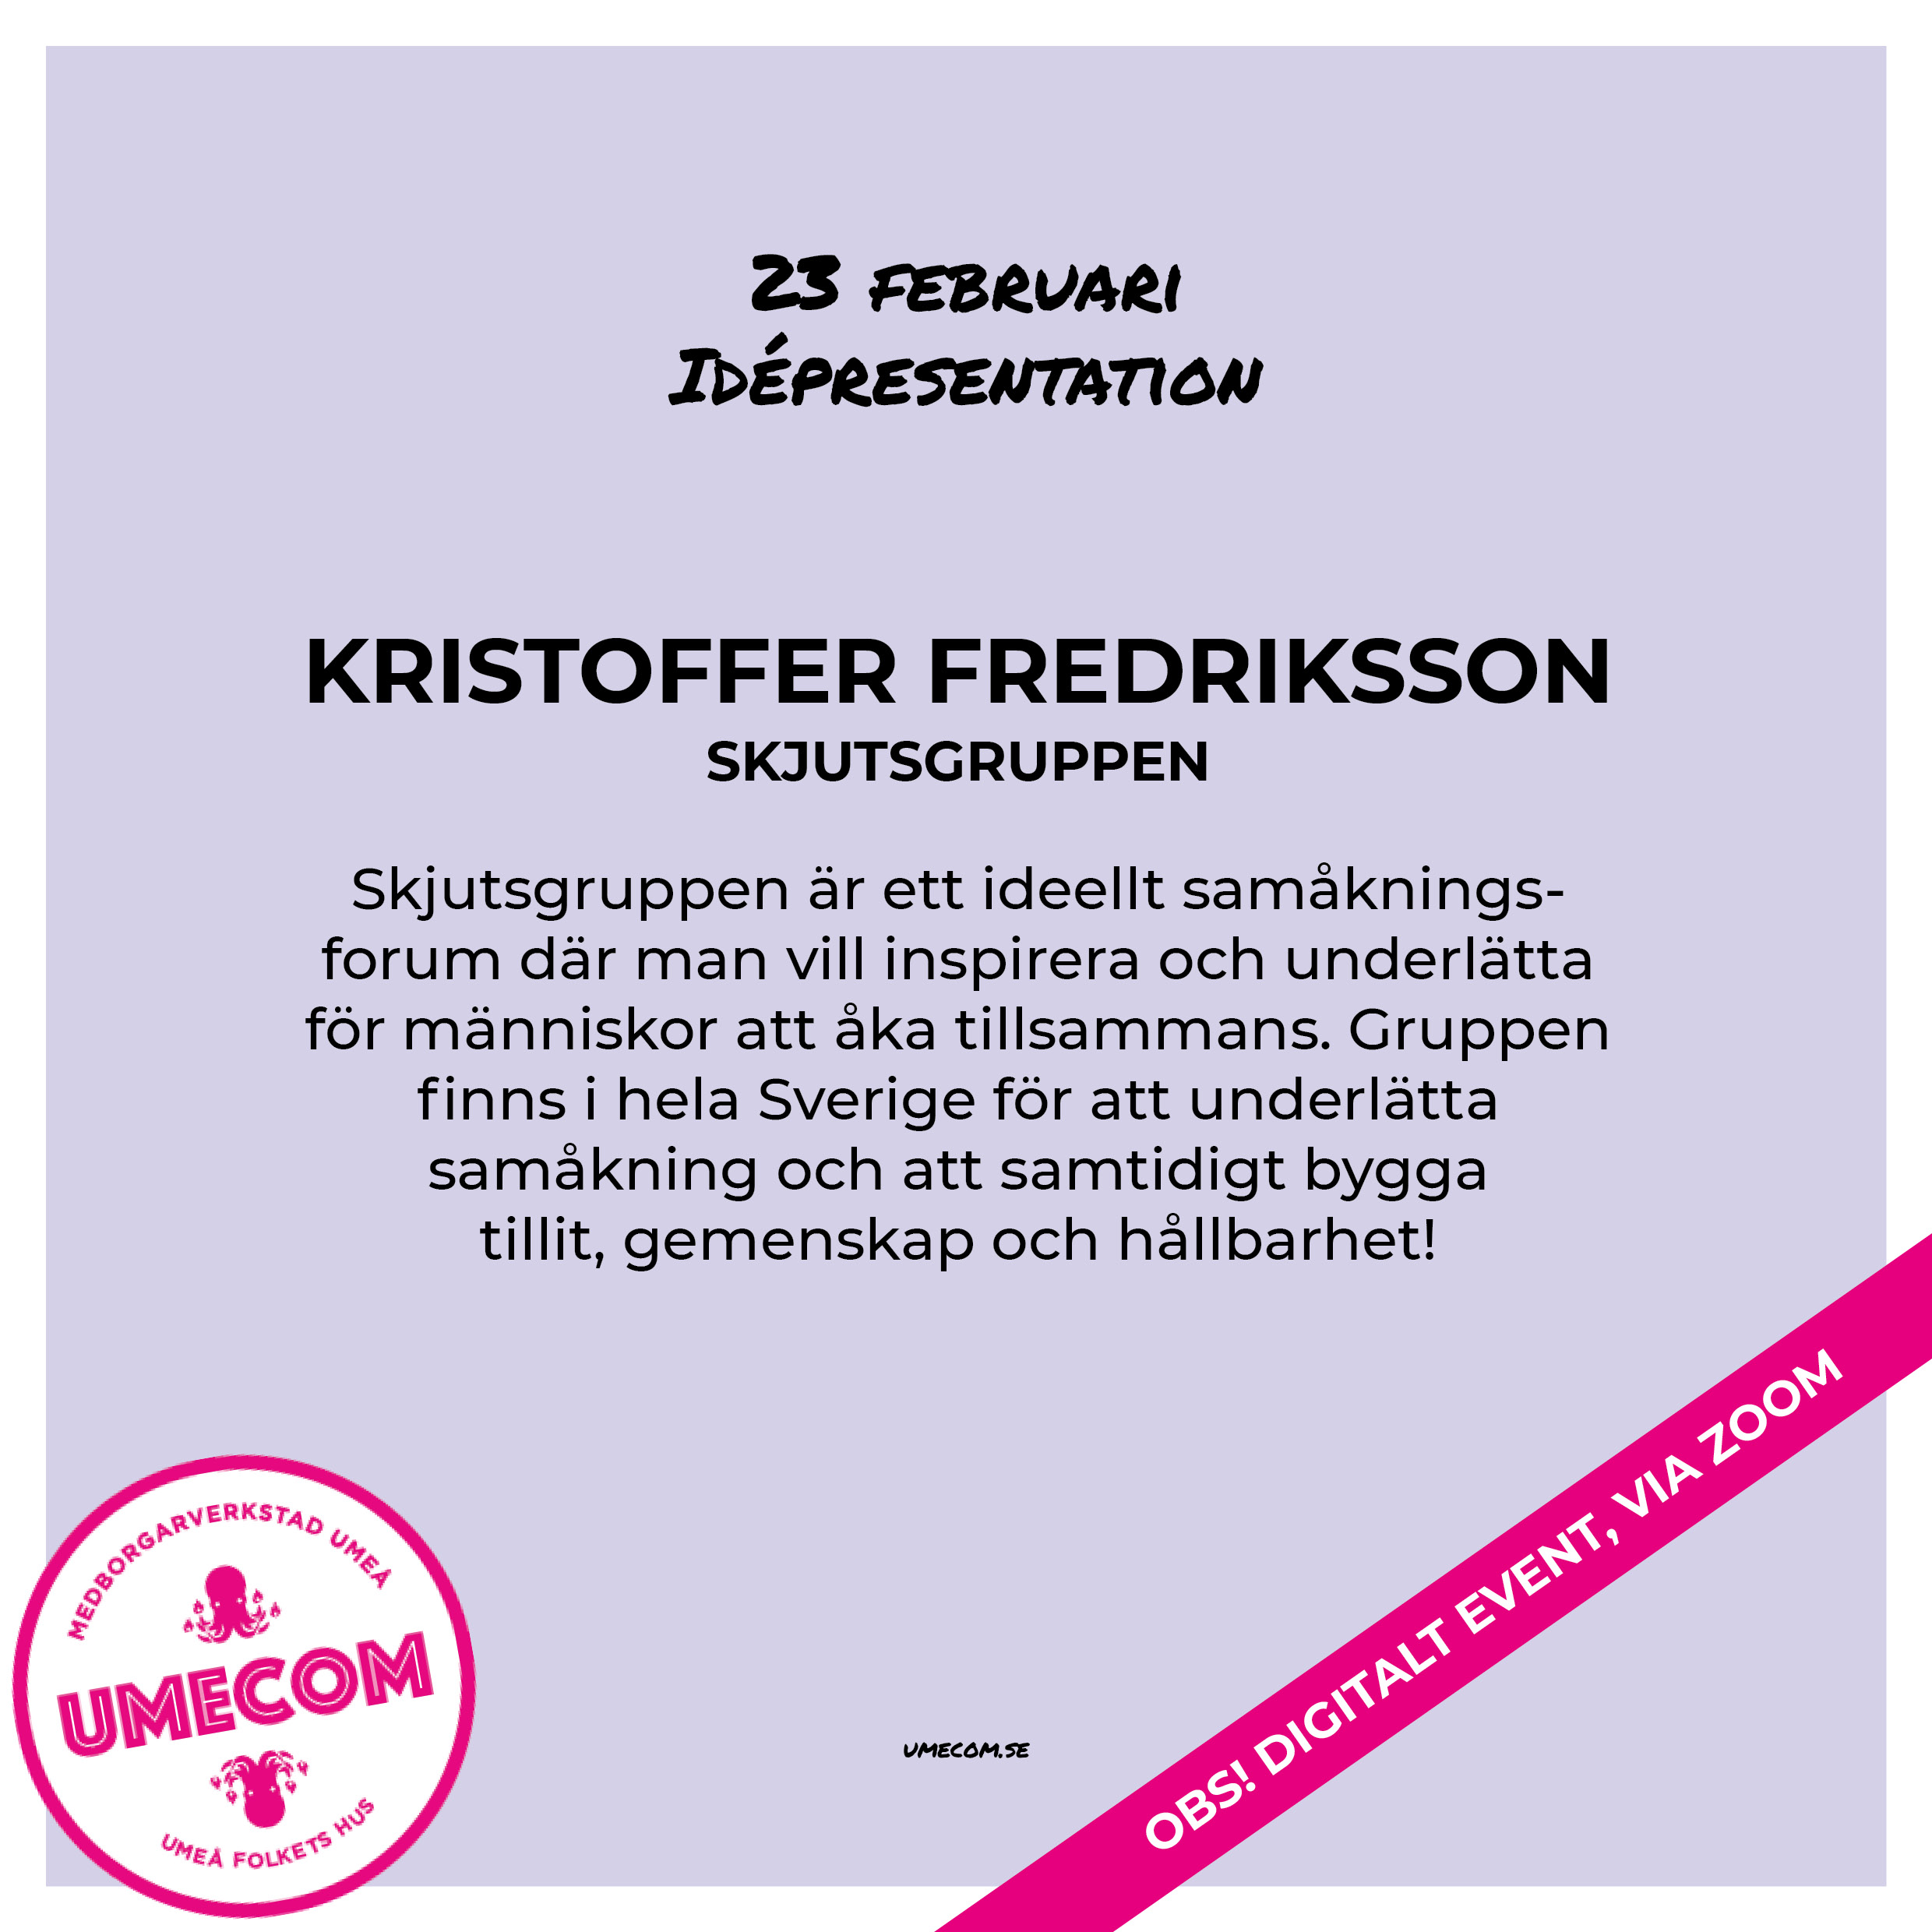 Kristoffer Fredriksson